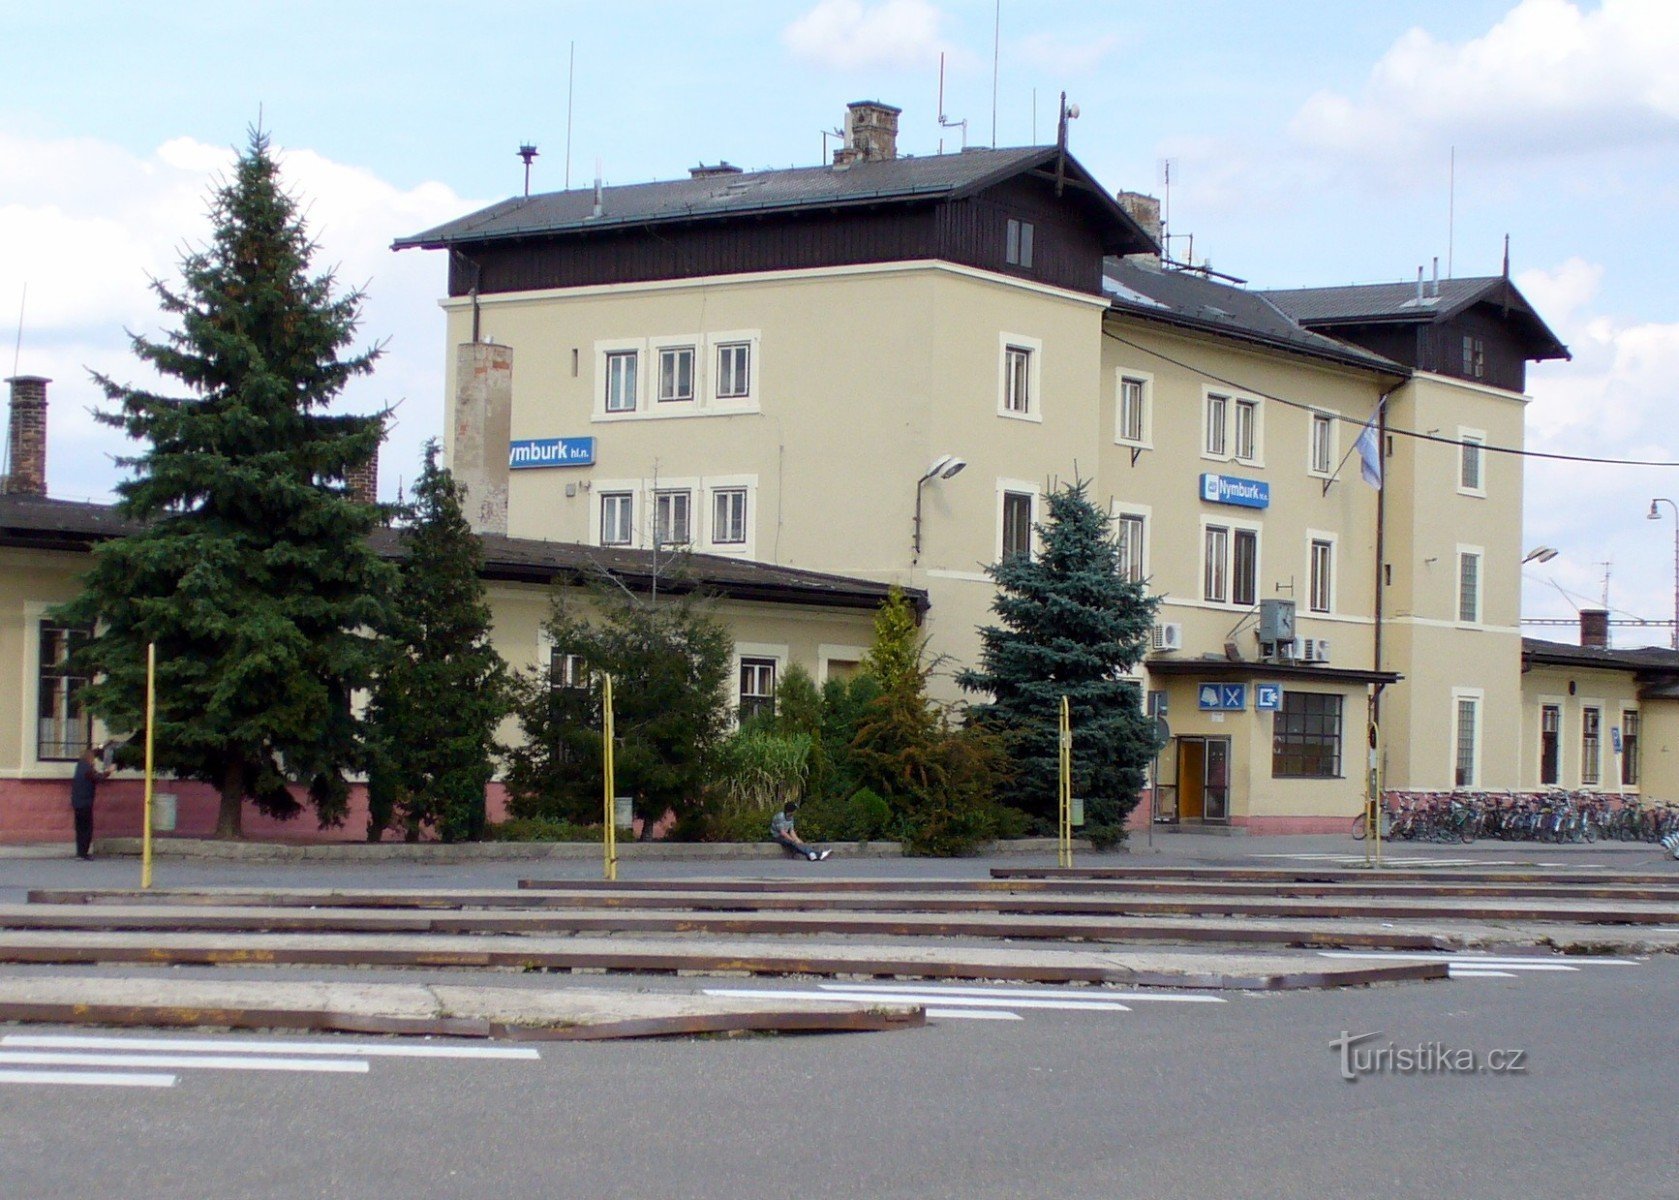 ČD:n päärautatieasema (vuodesta 1870)